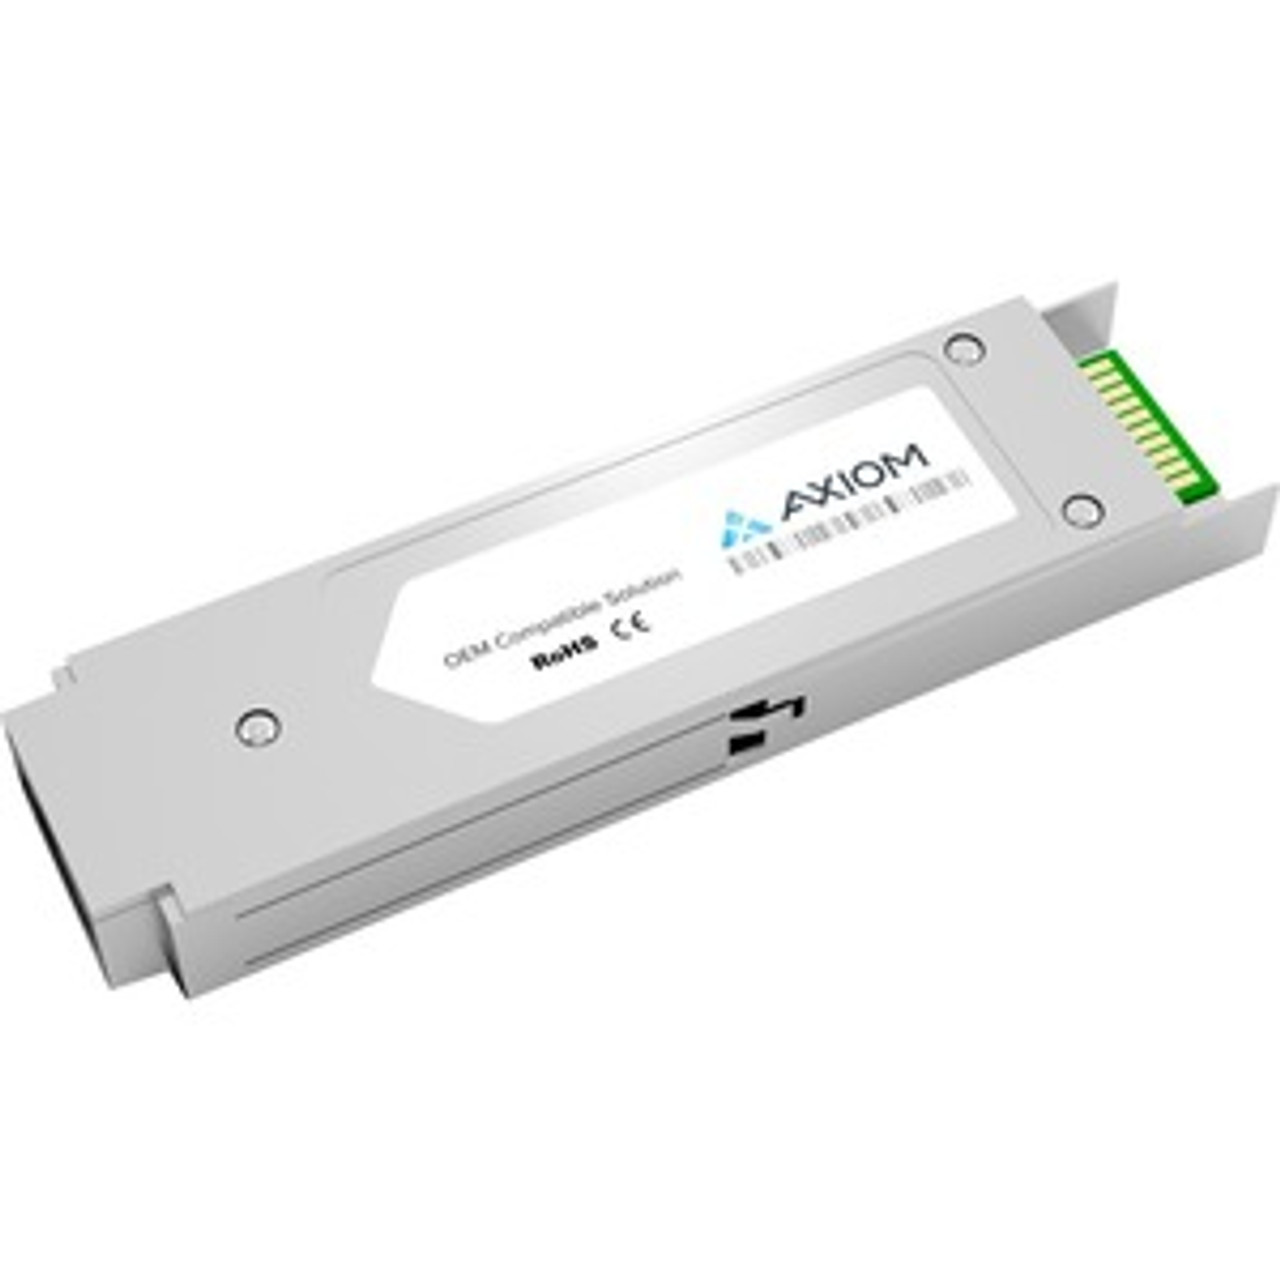 AA1403005-E5-ACC Accortec 10Gbps 10GBase-SR Multi-mode Fiber 300m 850nm Duplex LC Connector XFP Transceiver Module for Nortel Compatible